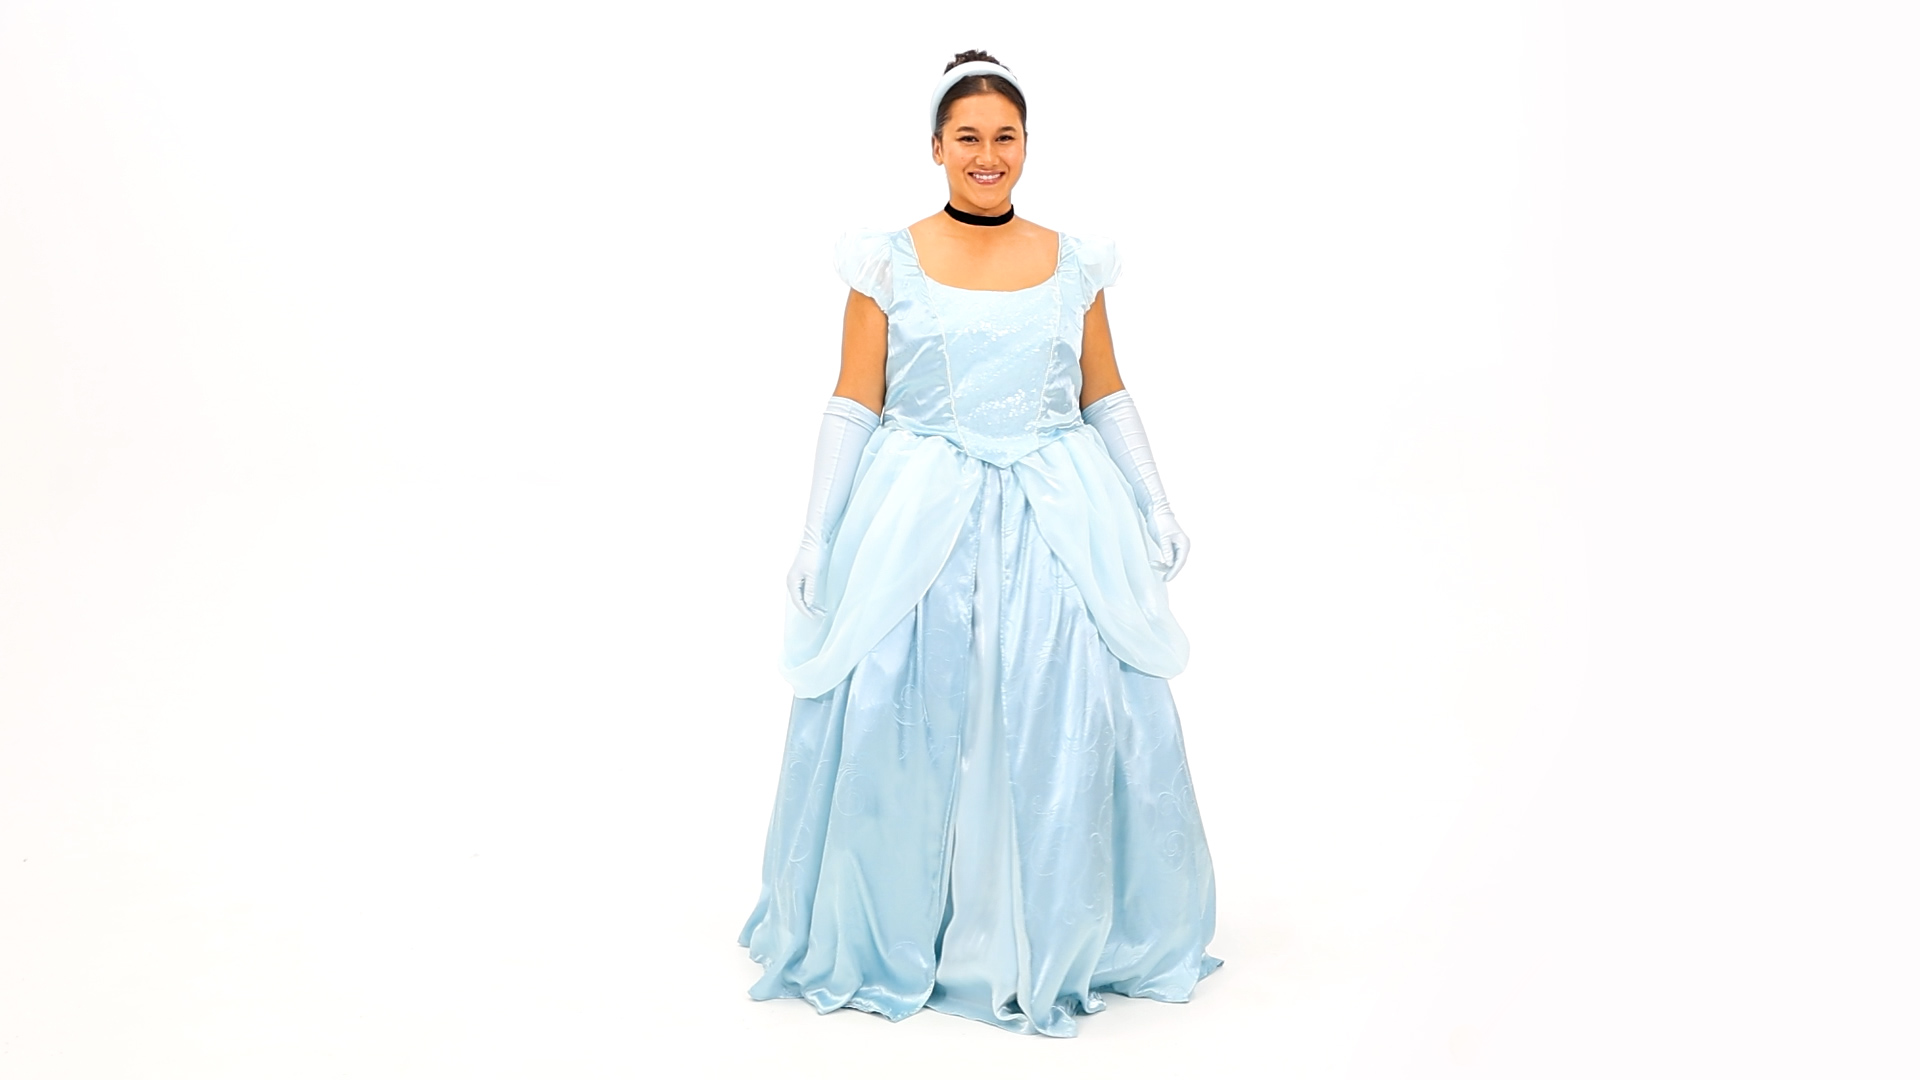 FUN3374PL Women's Plus Size Disney Premium Cinderella Costume Dress